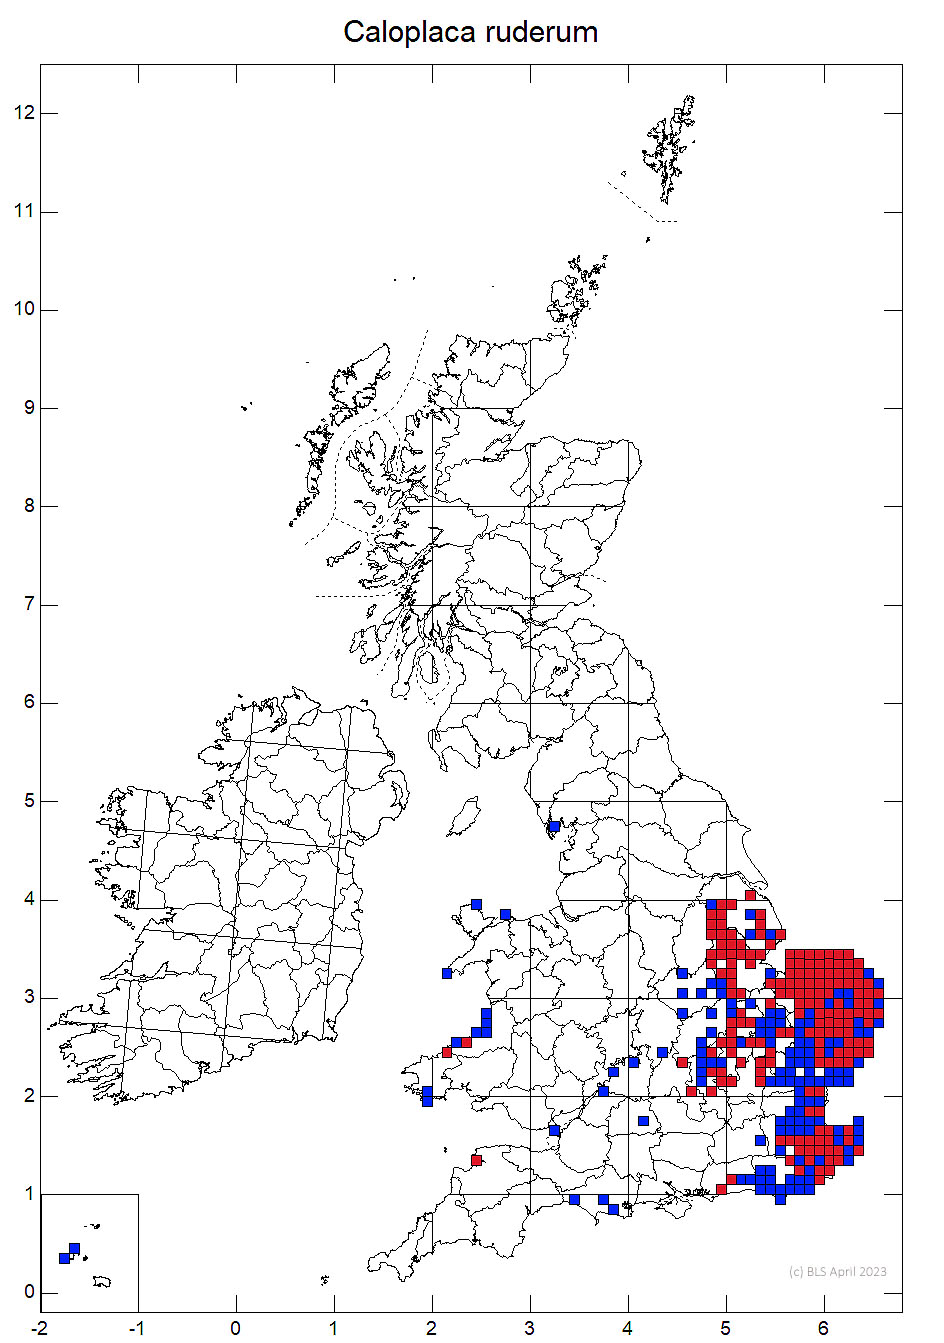 Caloplaca ruderum 10km sq distribution map